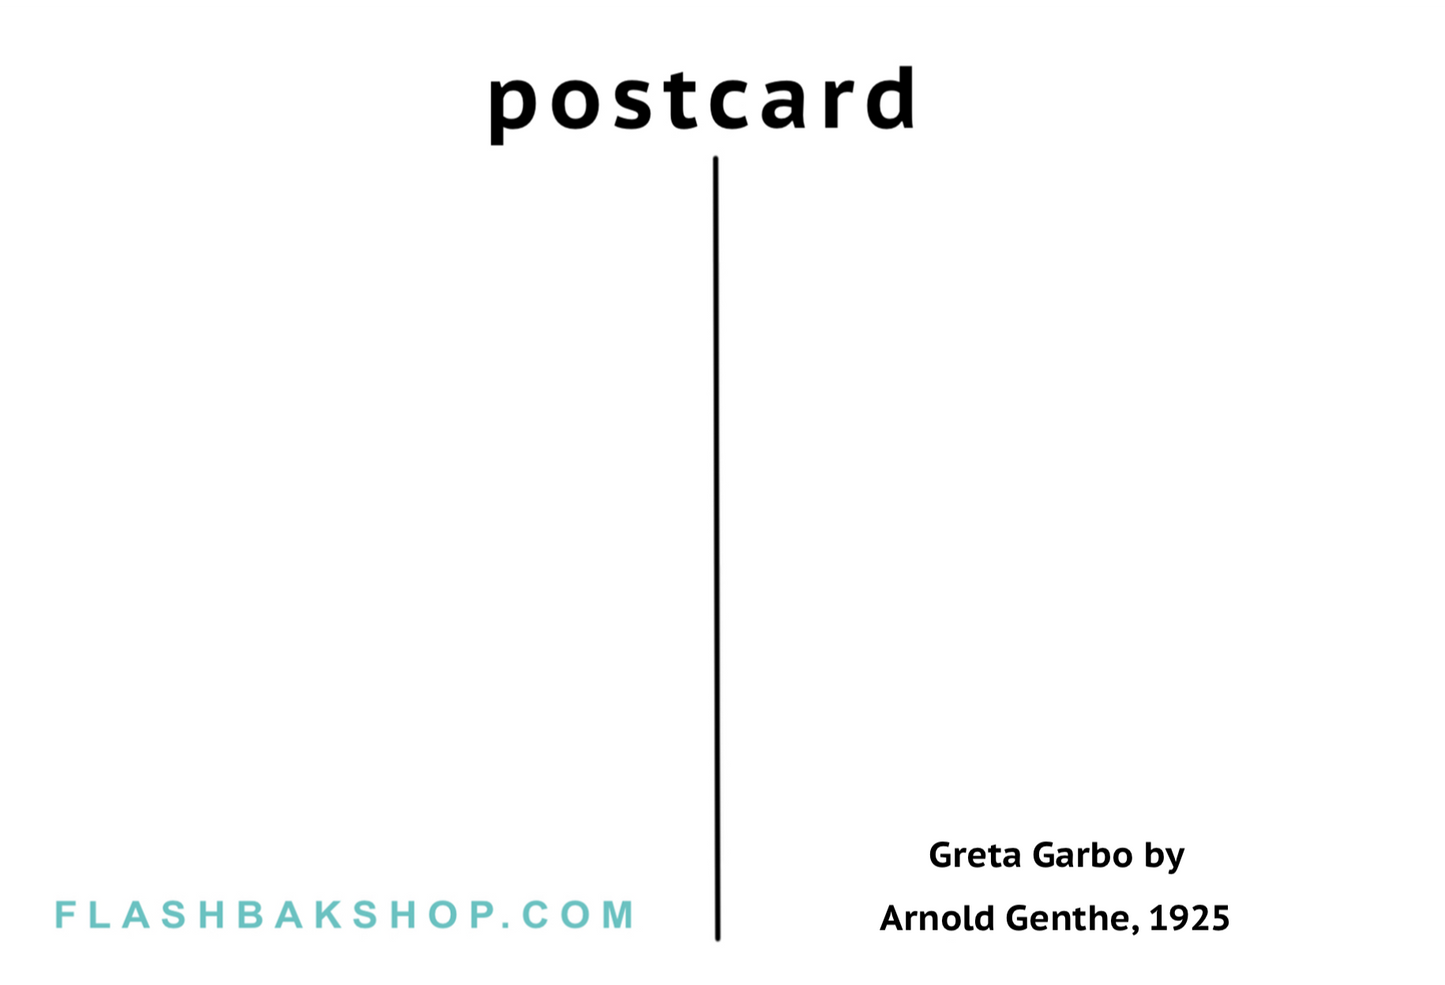 Greta Garbo par Arnold Genthe, 1925 - Carte postale